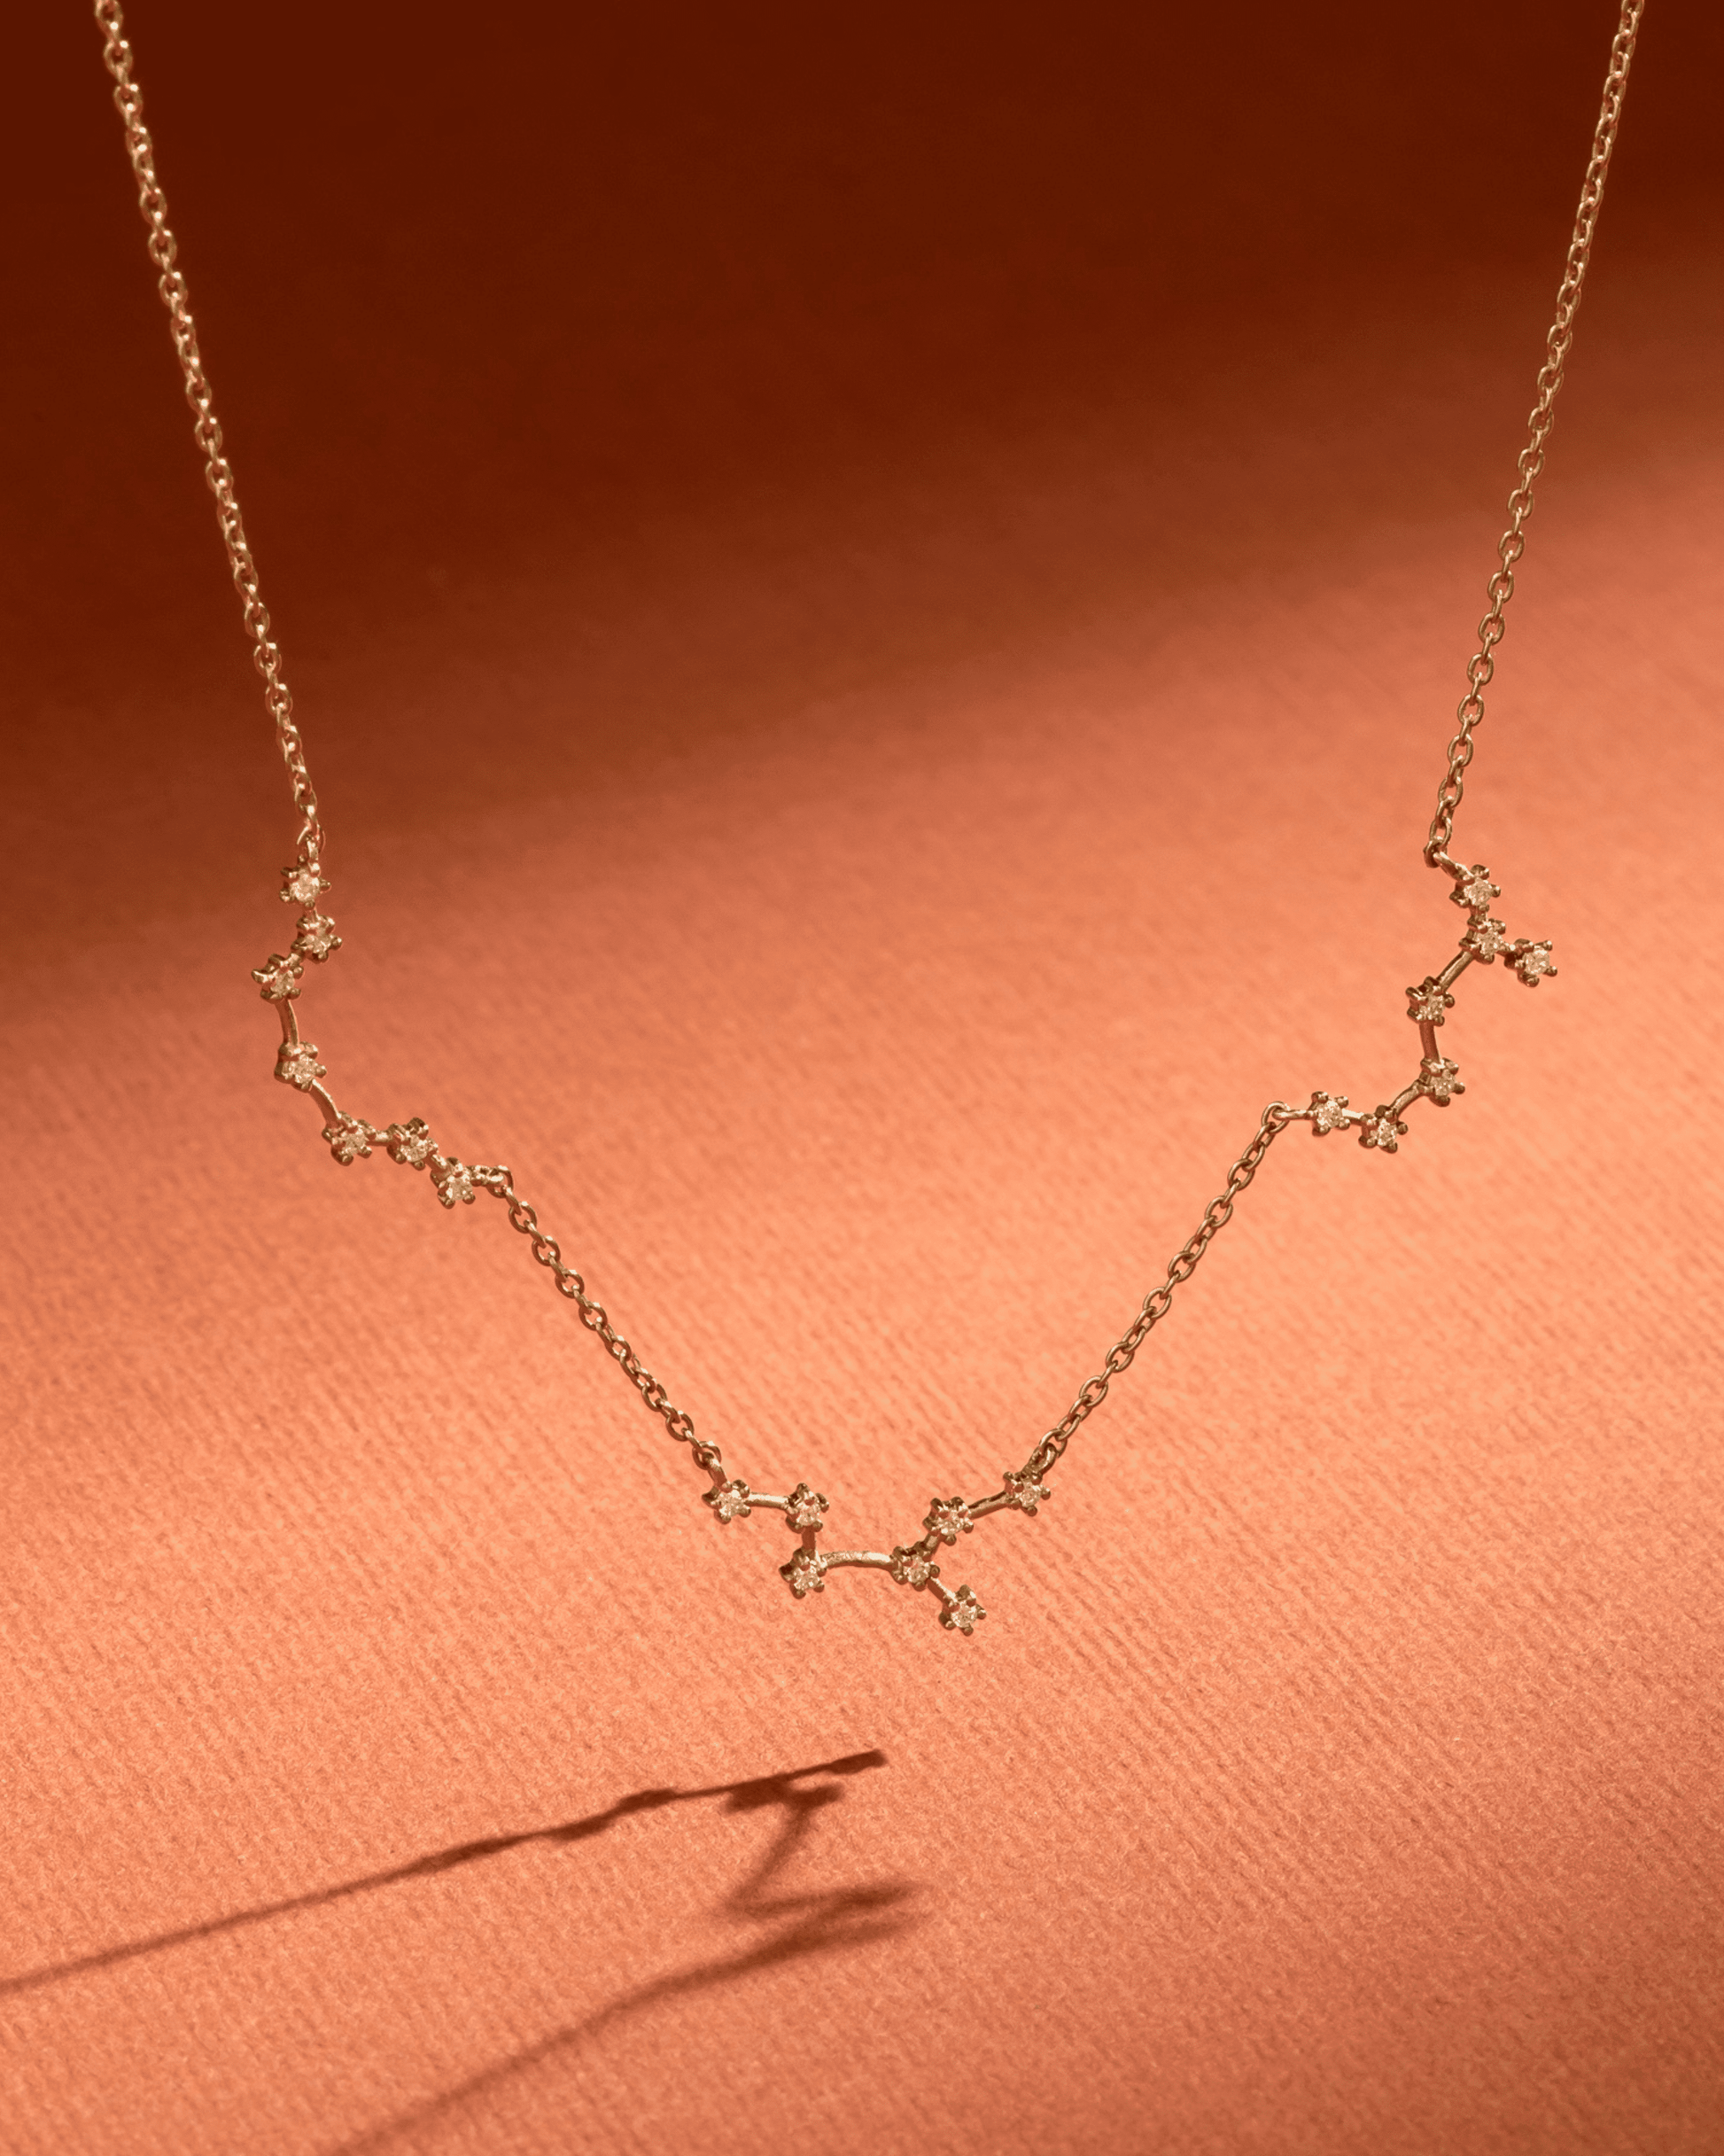 The Constellation Necklace - 18K Rose Vermeil Necklaces magal-dev 